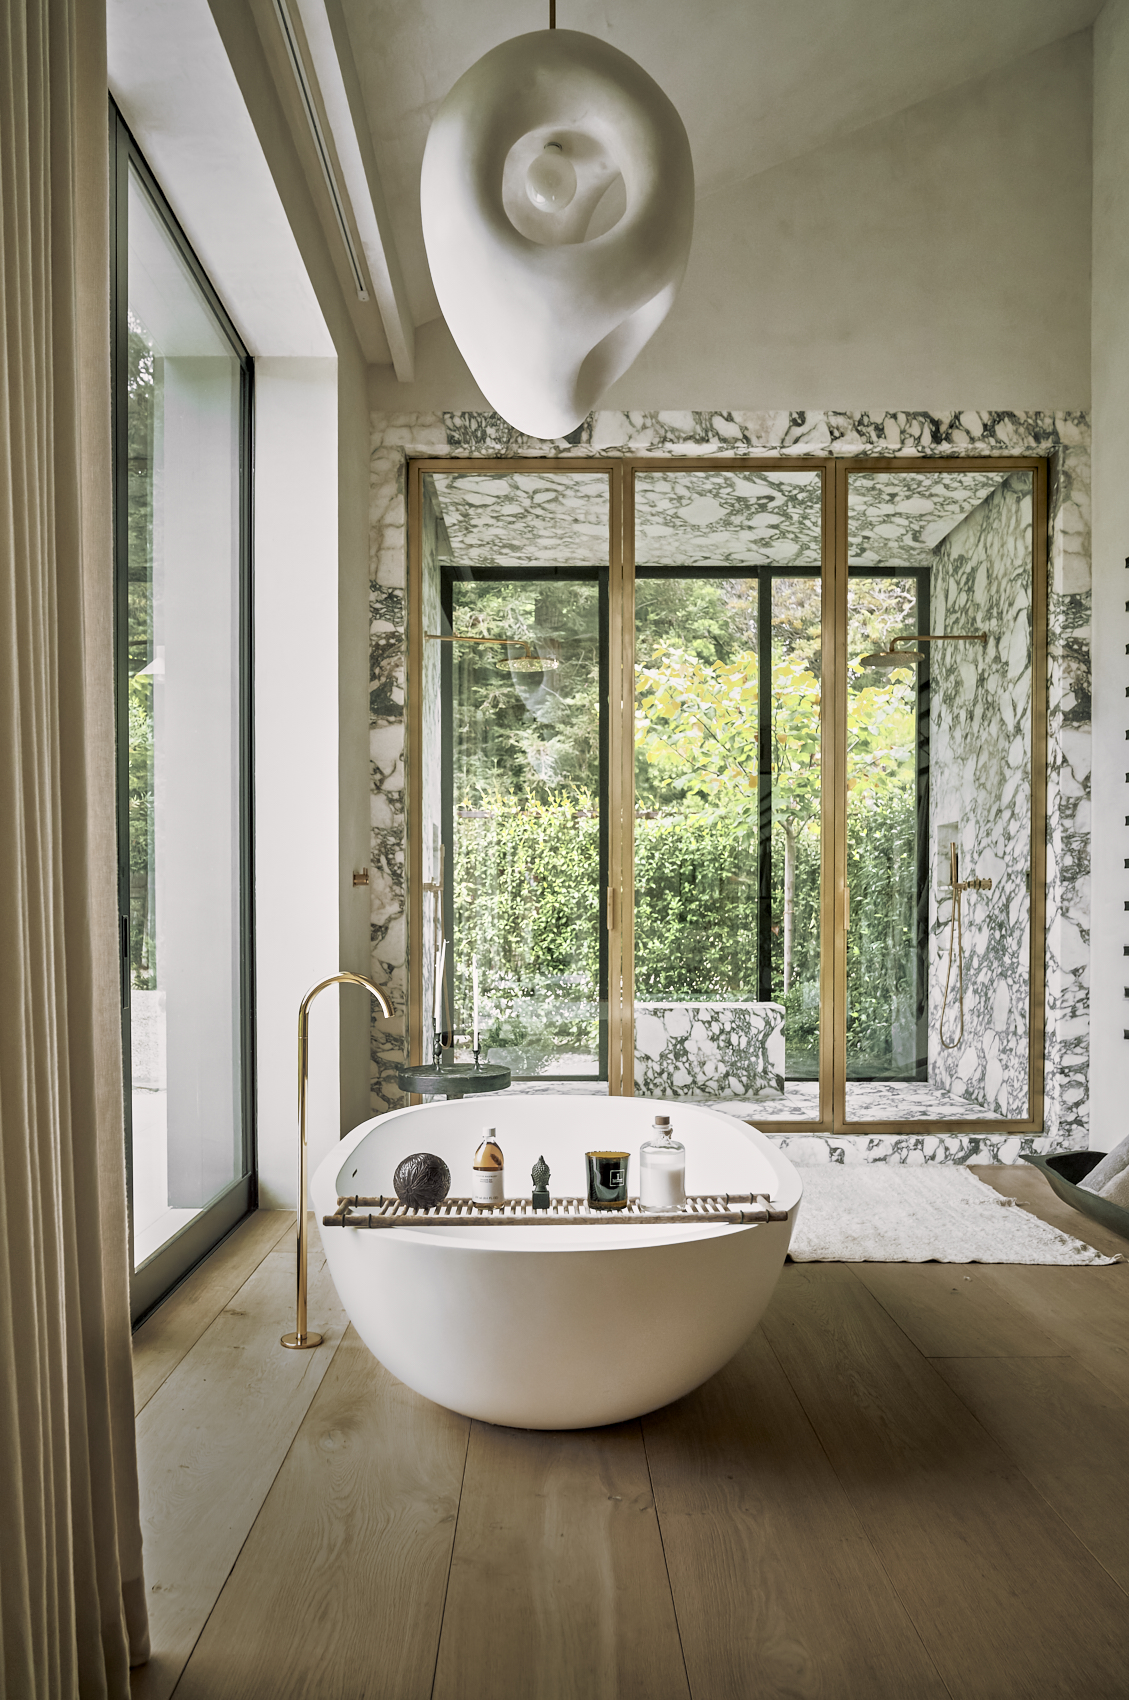 Freestanding white bathtub and large marble shower under shell pendant light